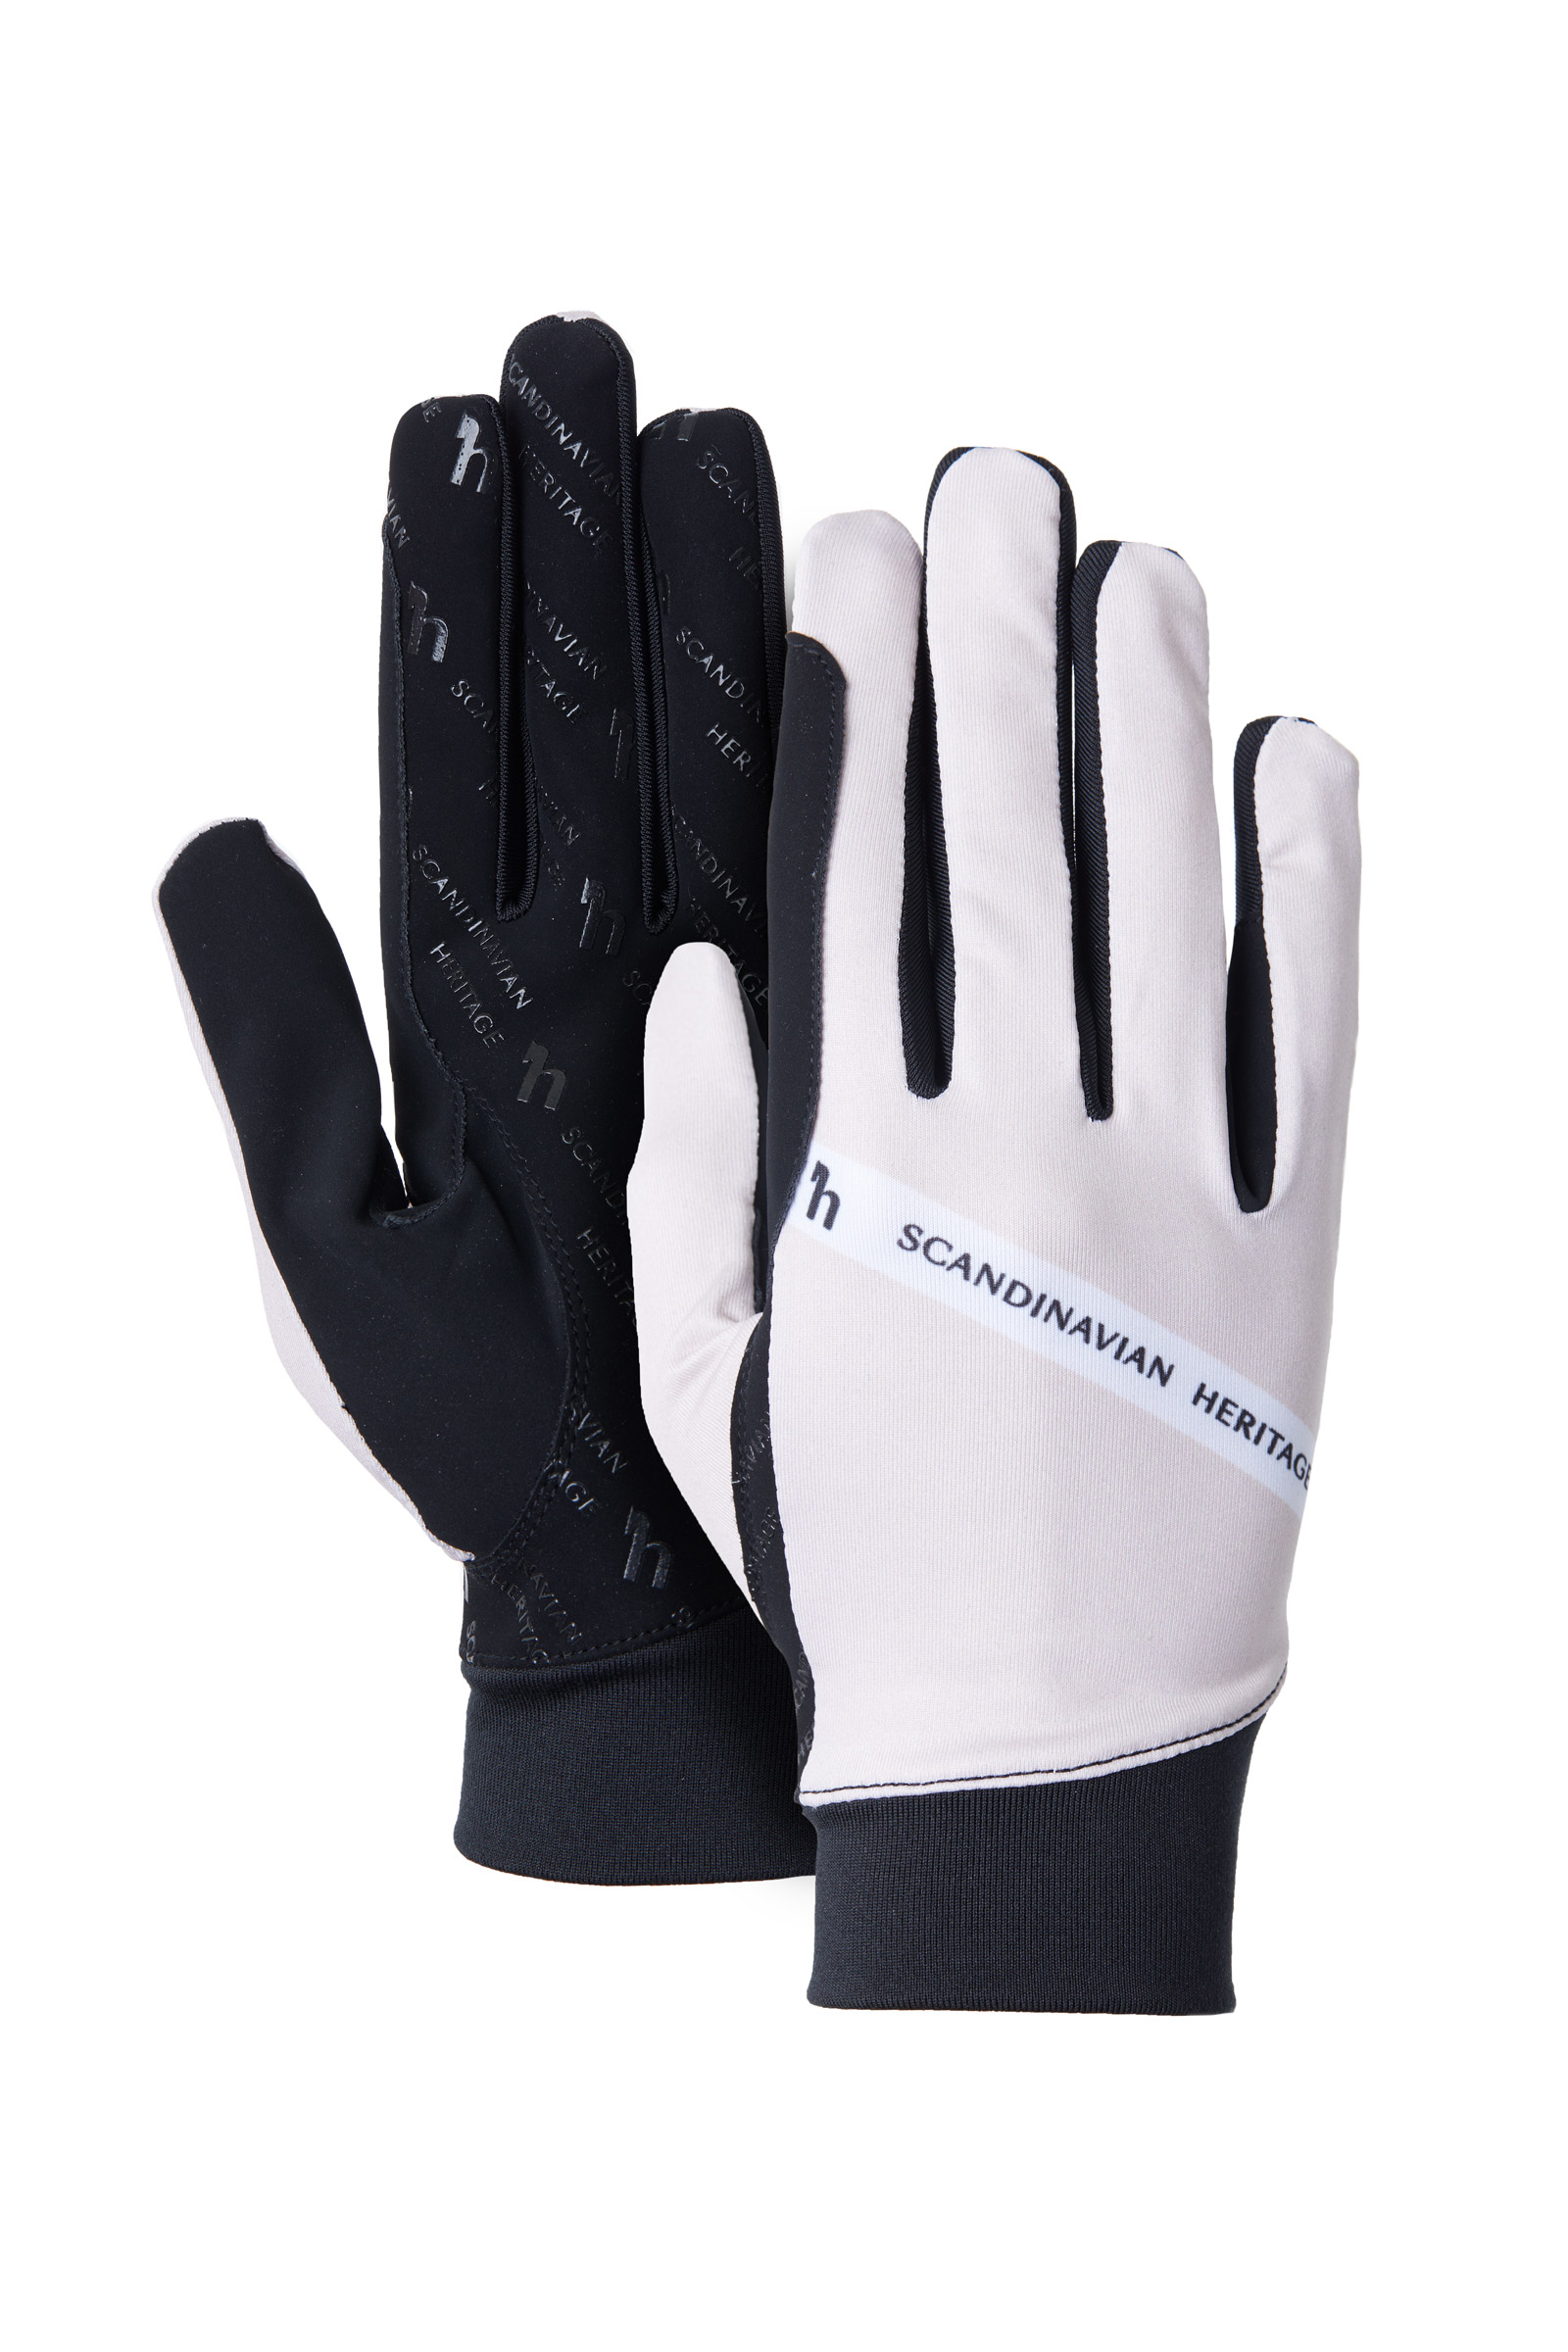 Buy Horze Gabriela Women's Stretch Riding Gloves with UV